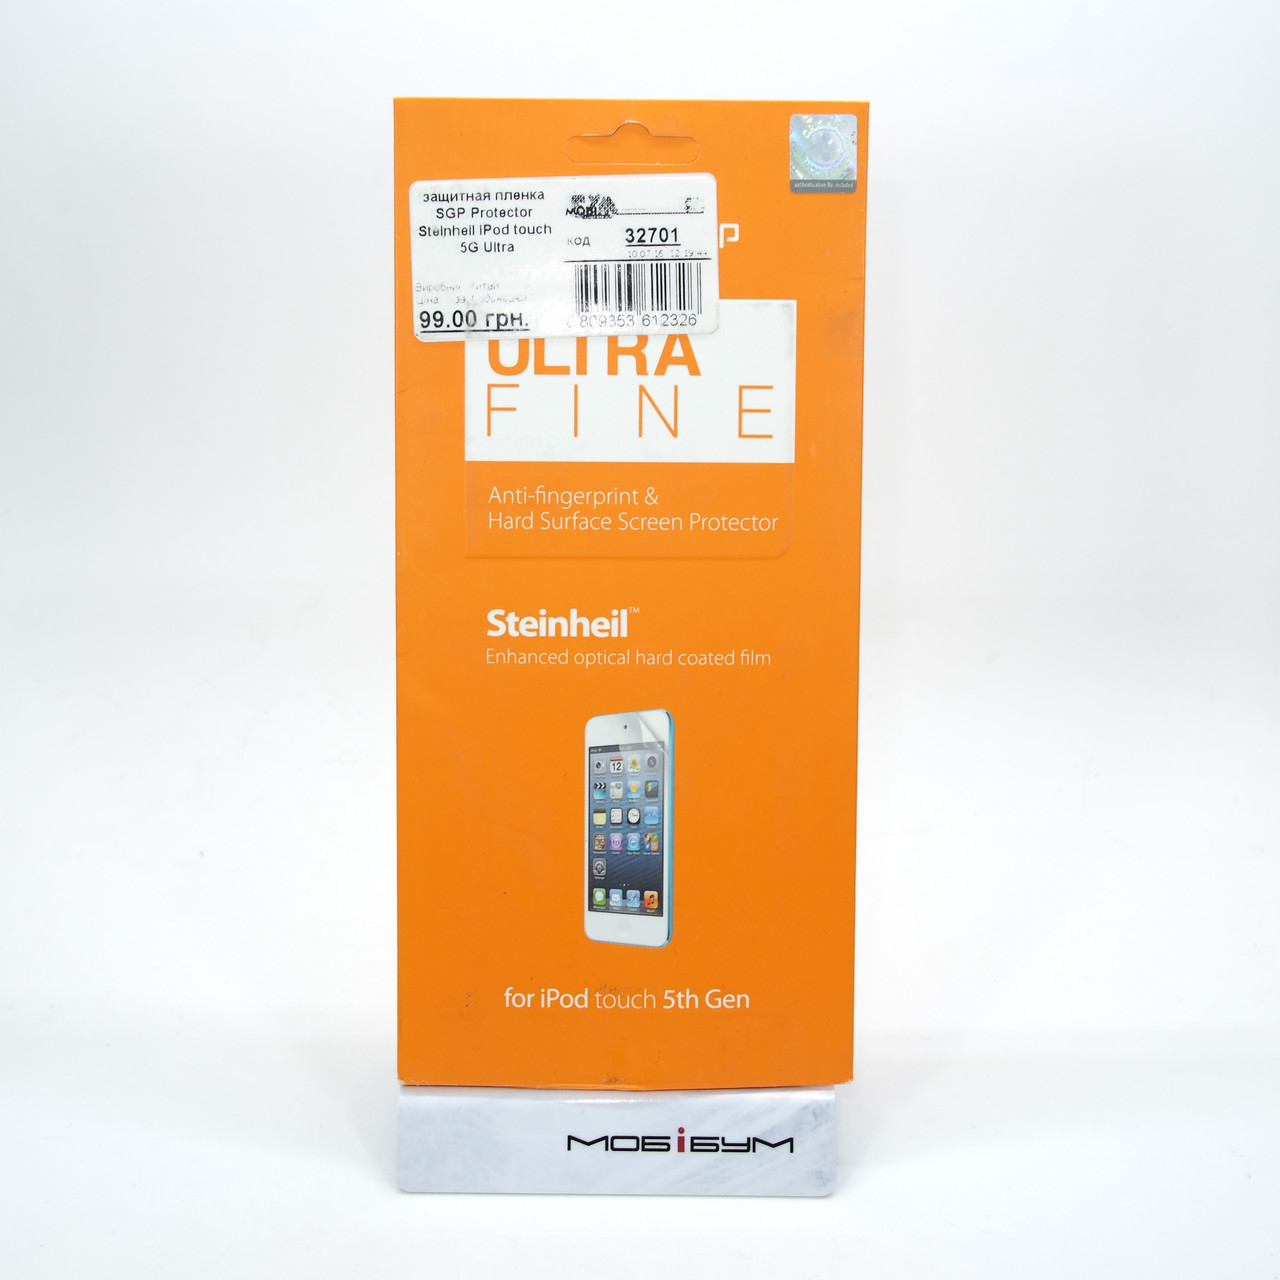 Захисна плівка Spigen Protector Steinheil iPod touch 5G Ultra Fine [SGP09559]